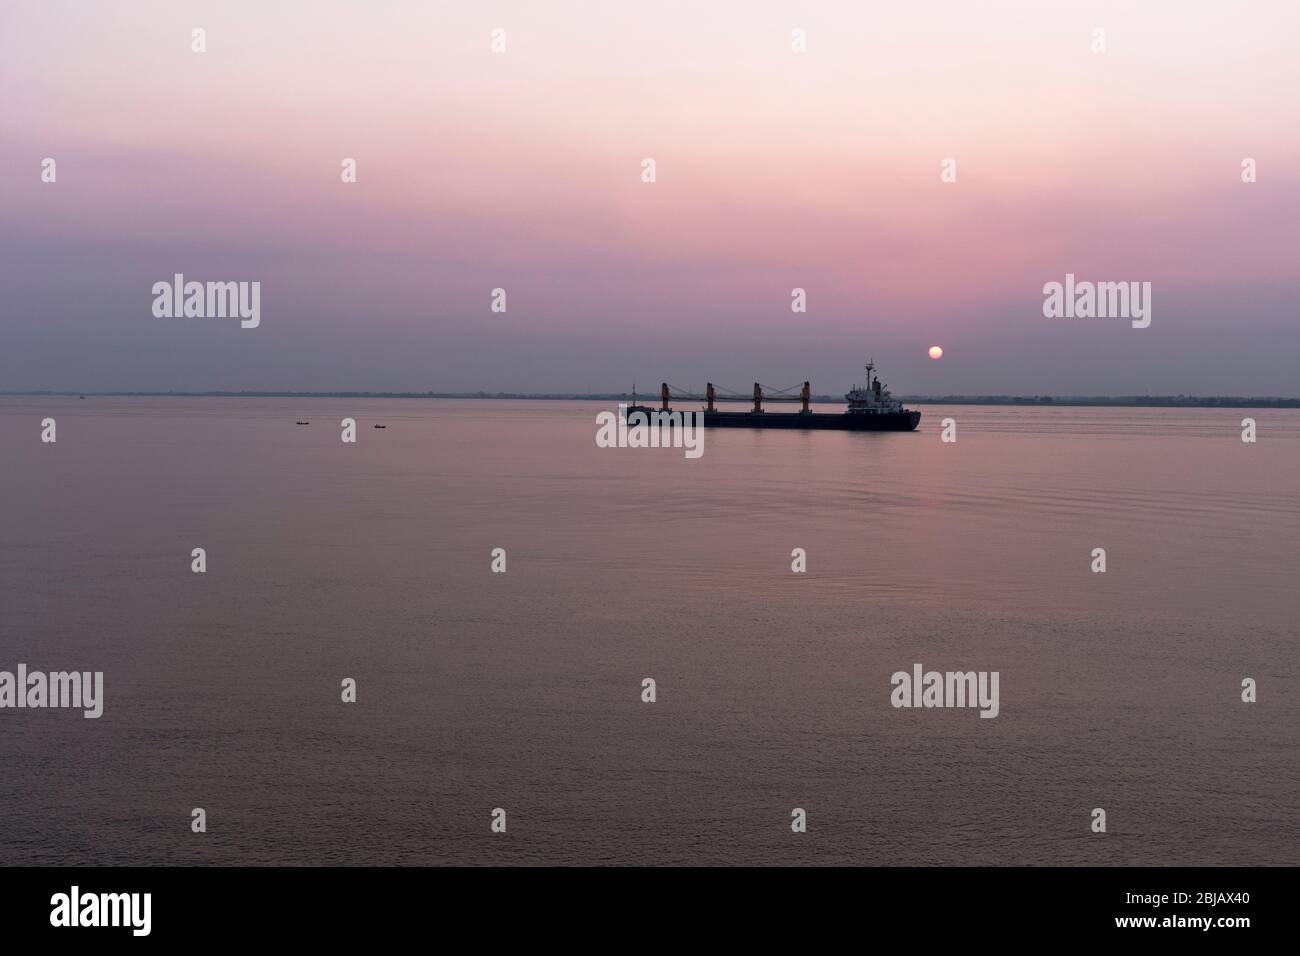 dh Far east Asia YANGON RIVER MYANMAR Sunset over Merchant Navy cargo ship asian shipping vessel far east Stock Photo